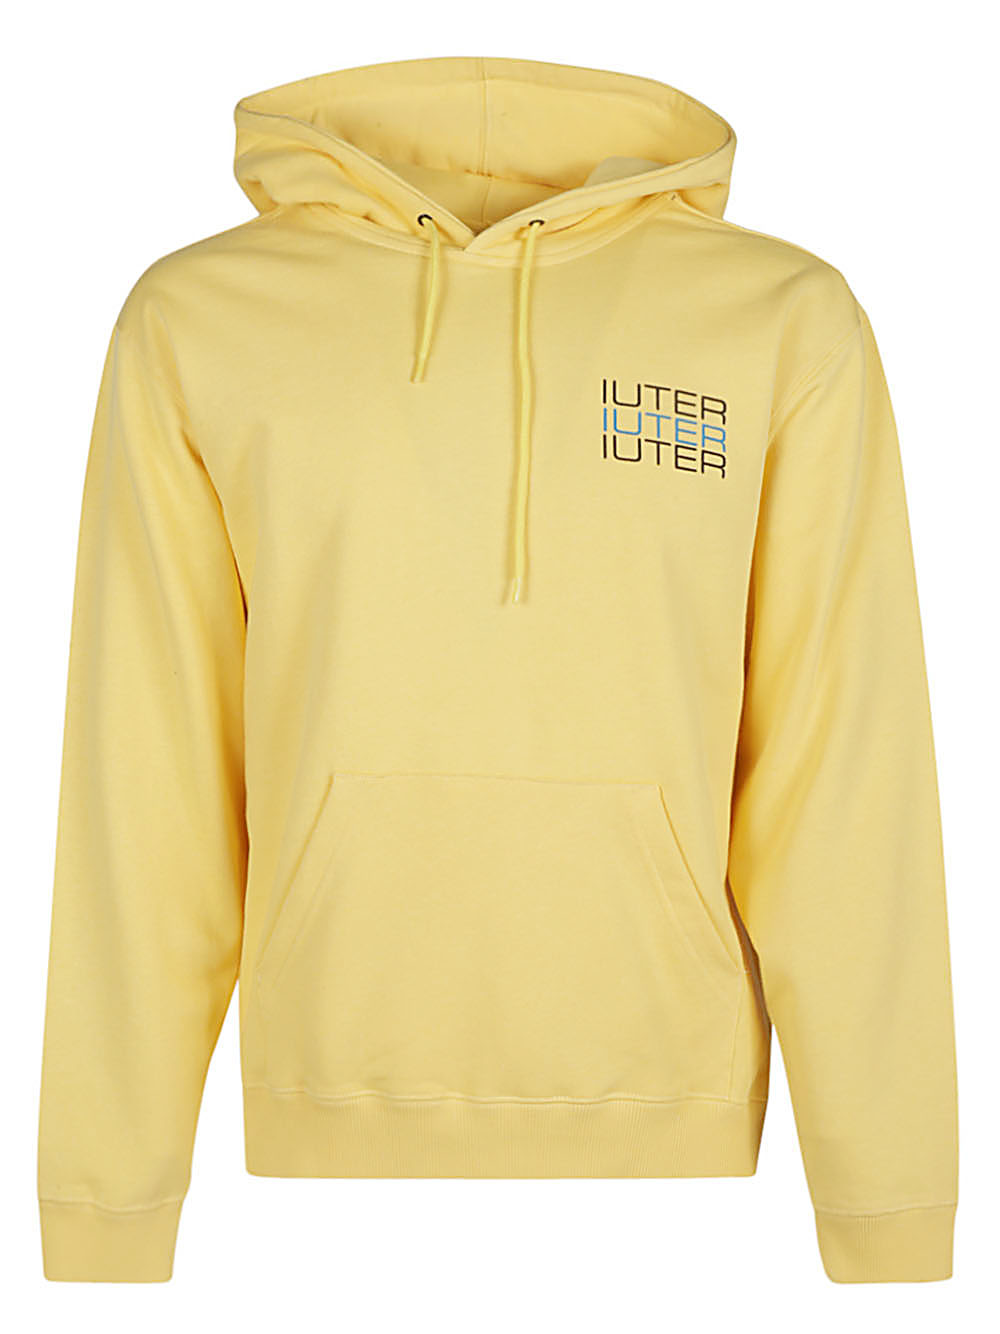 Iuter IUTER- Printed Cotton Hoodie